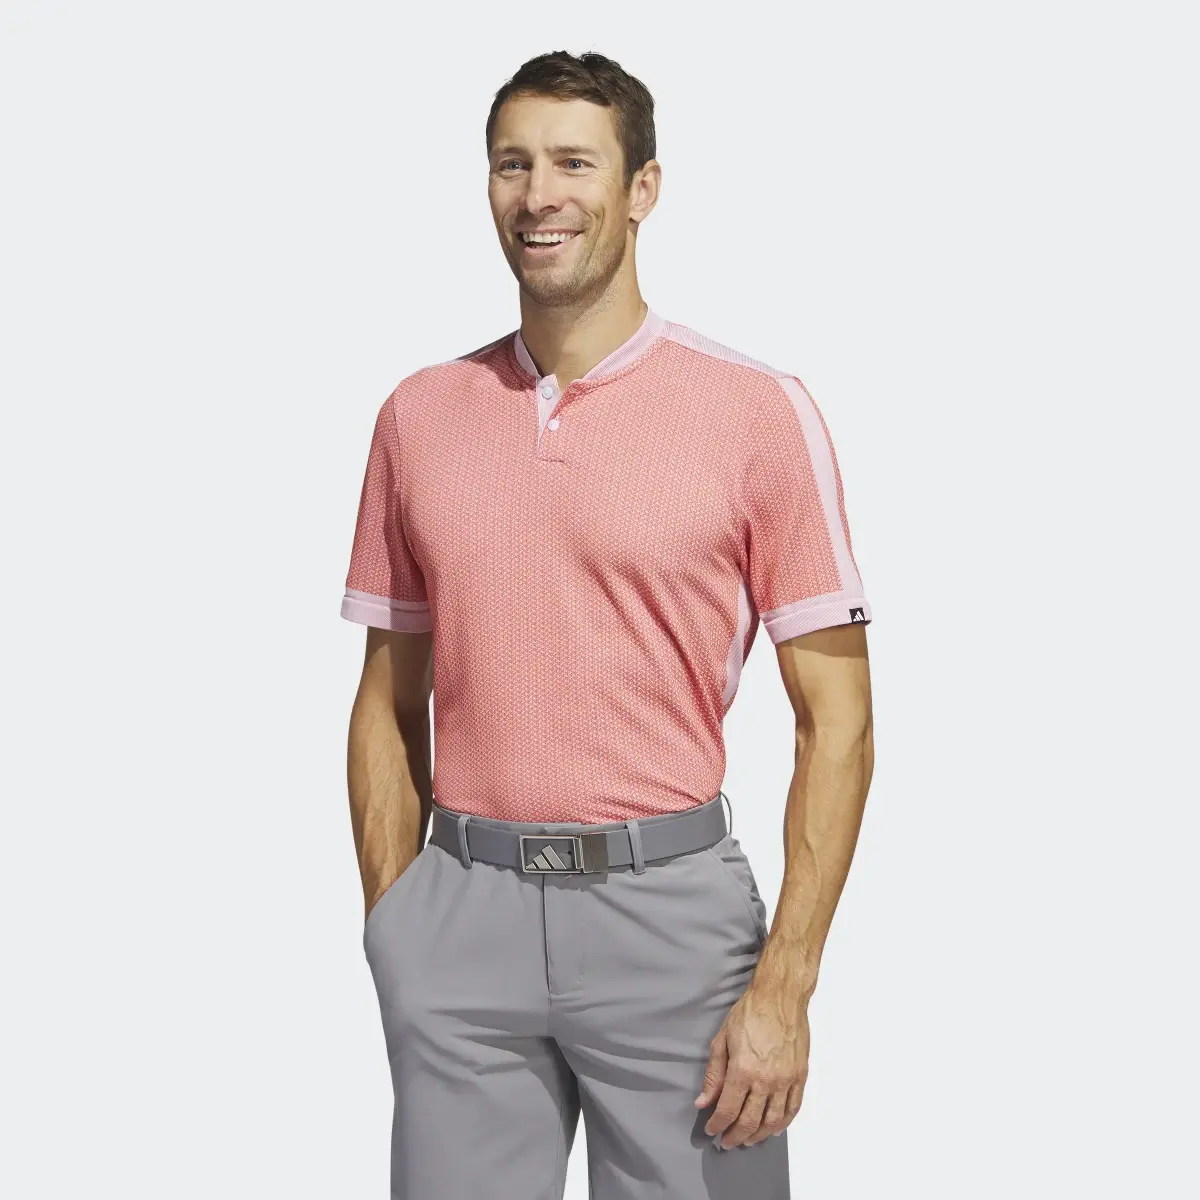 Adidas Ultimate365 Tour Textured PRIMEKNIT Golf Polo Shirt. 2